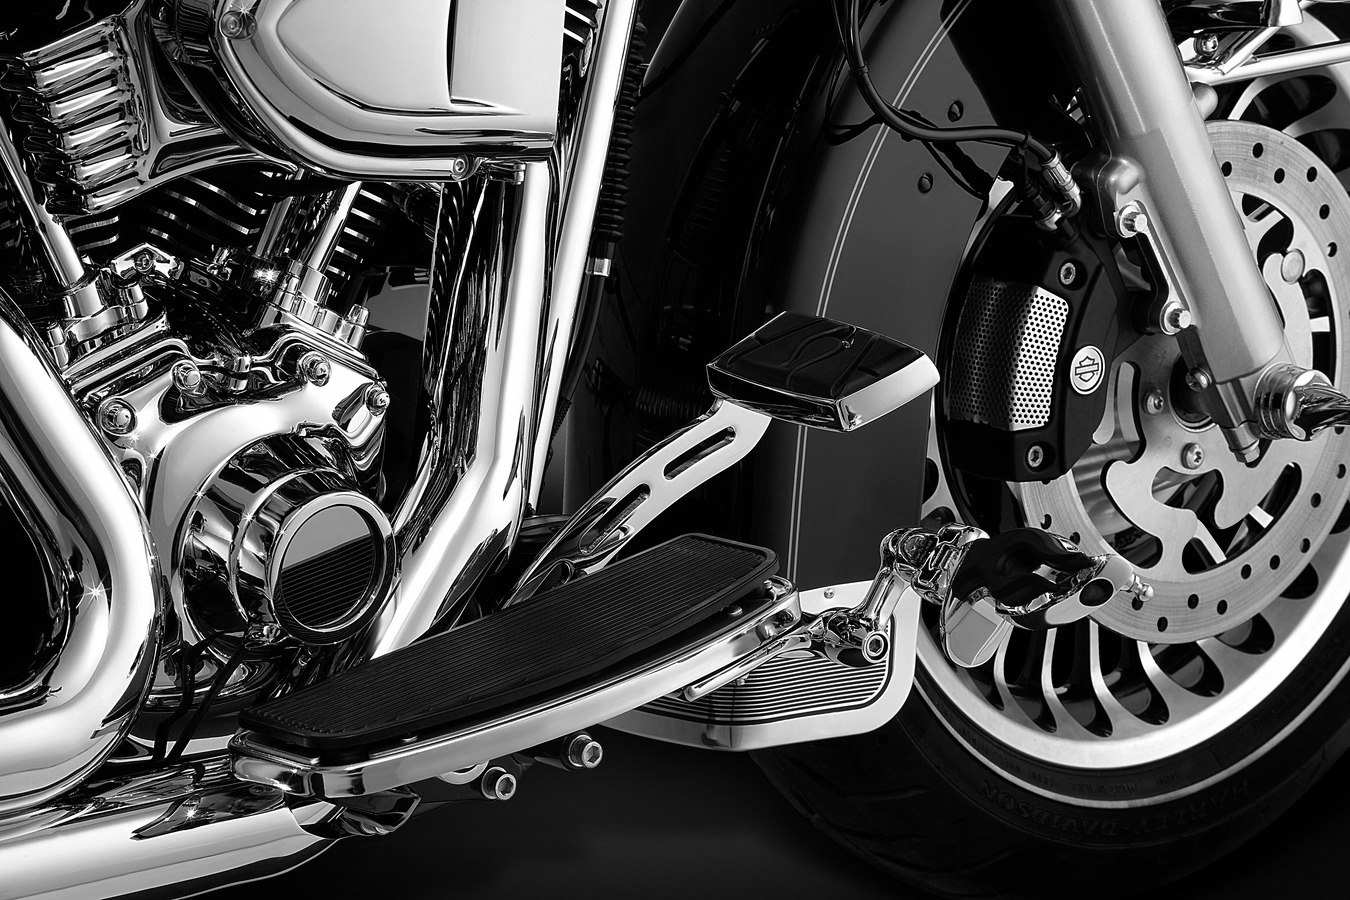 chrome Motorcycle Eagle Hawk Emblem Foot Large Brake Pedal For Harley Electra Glide Softail Dyna